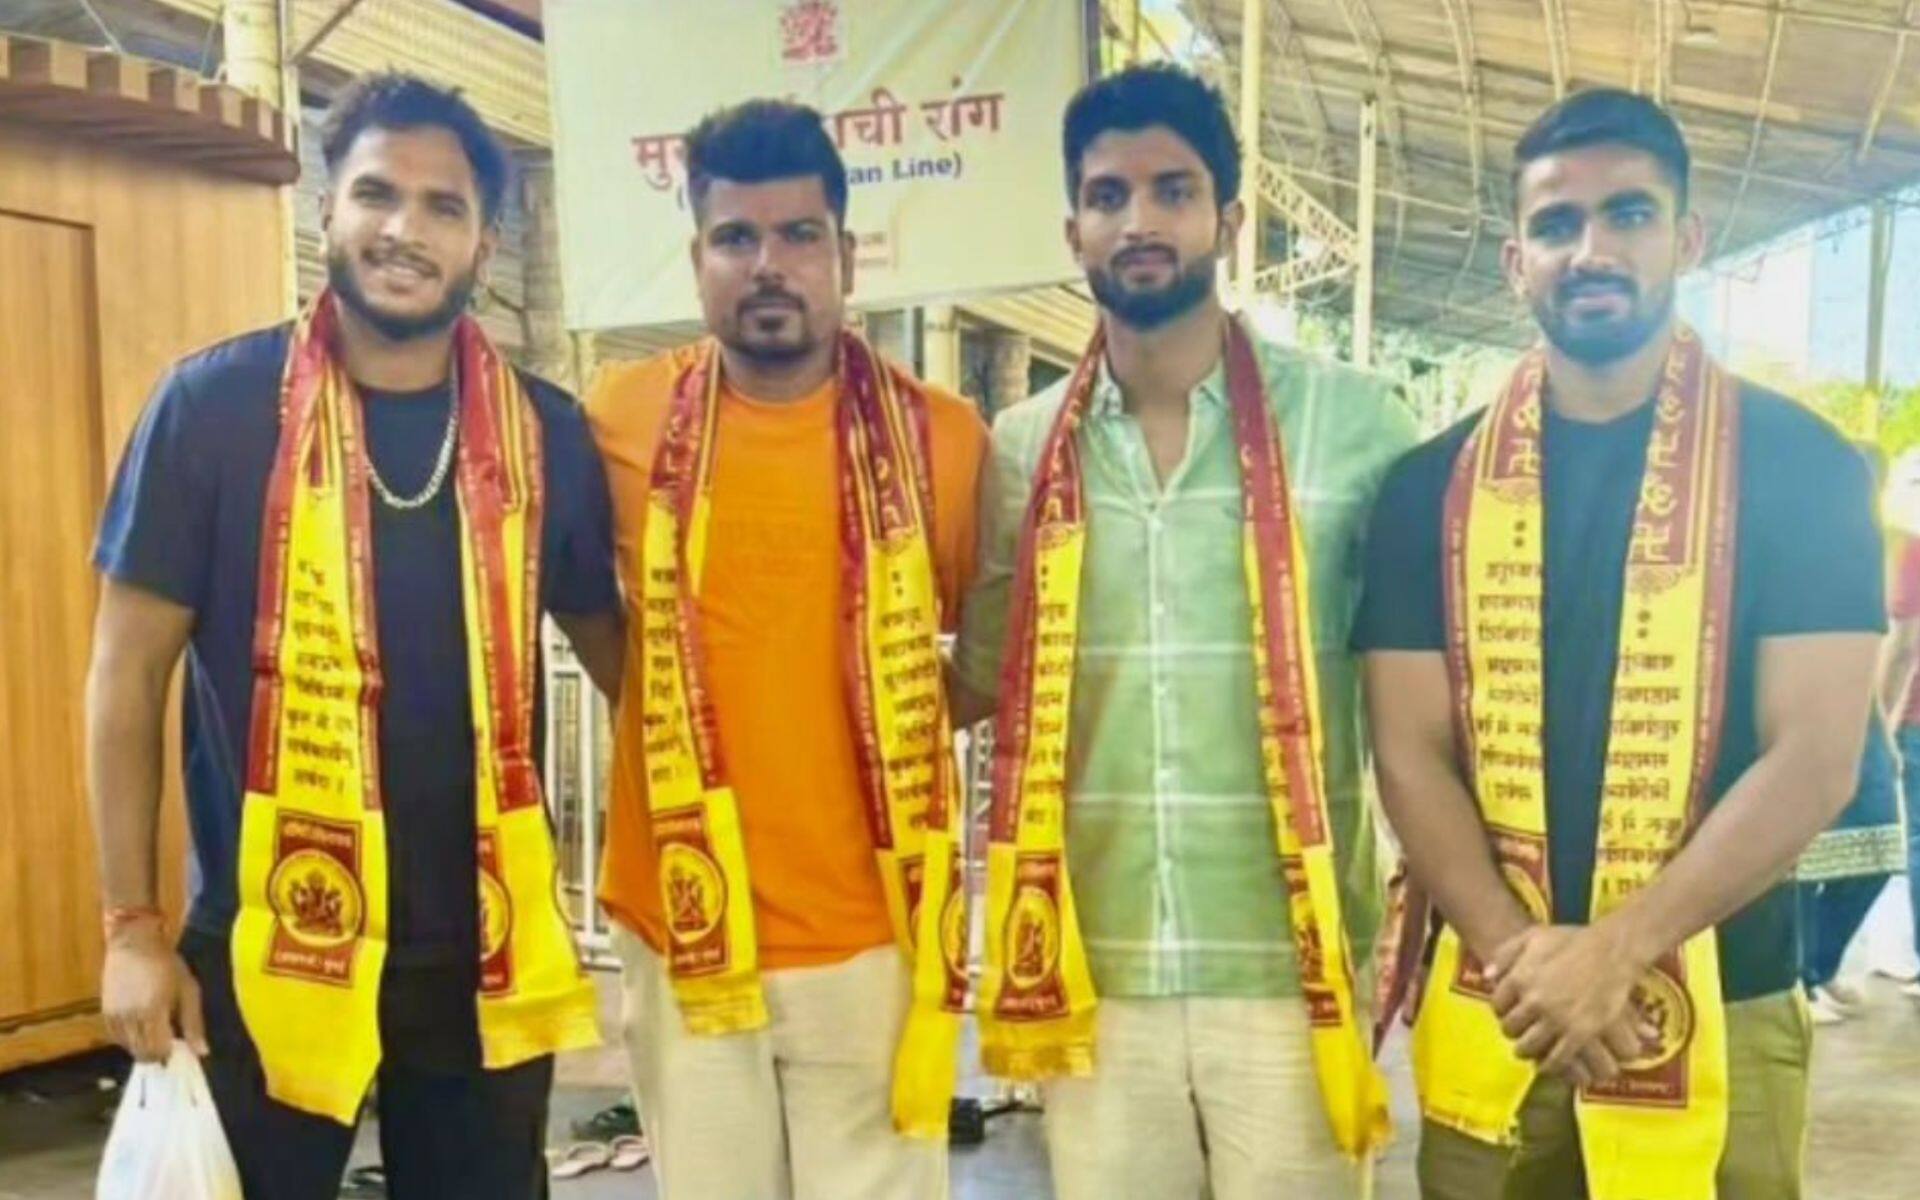 RCB players at Siddhivinayak Temple (x.com)